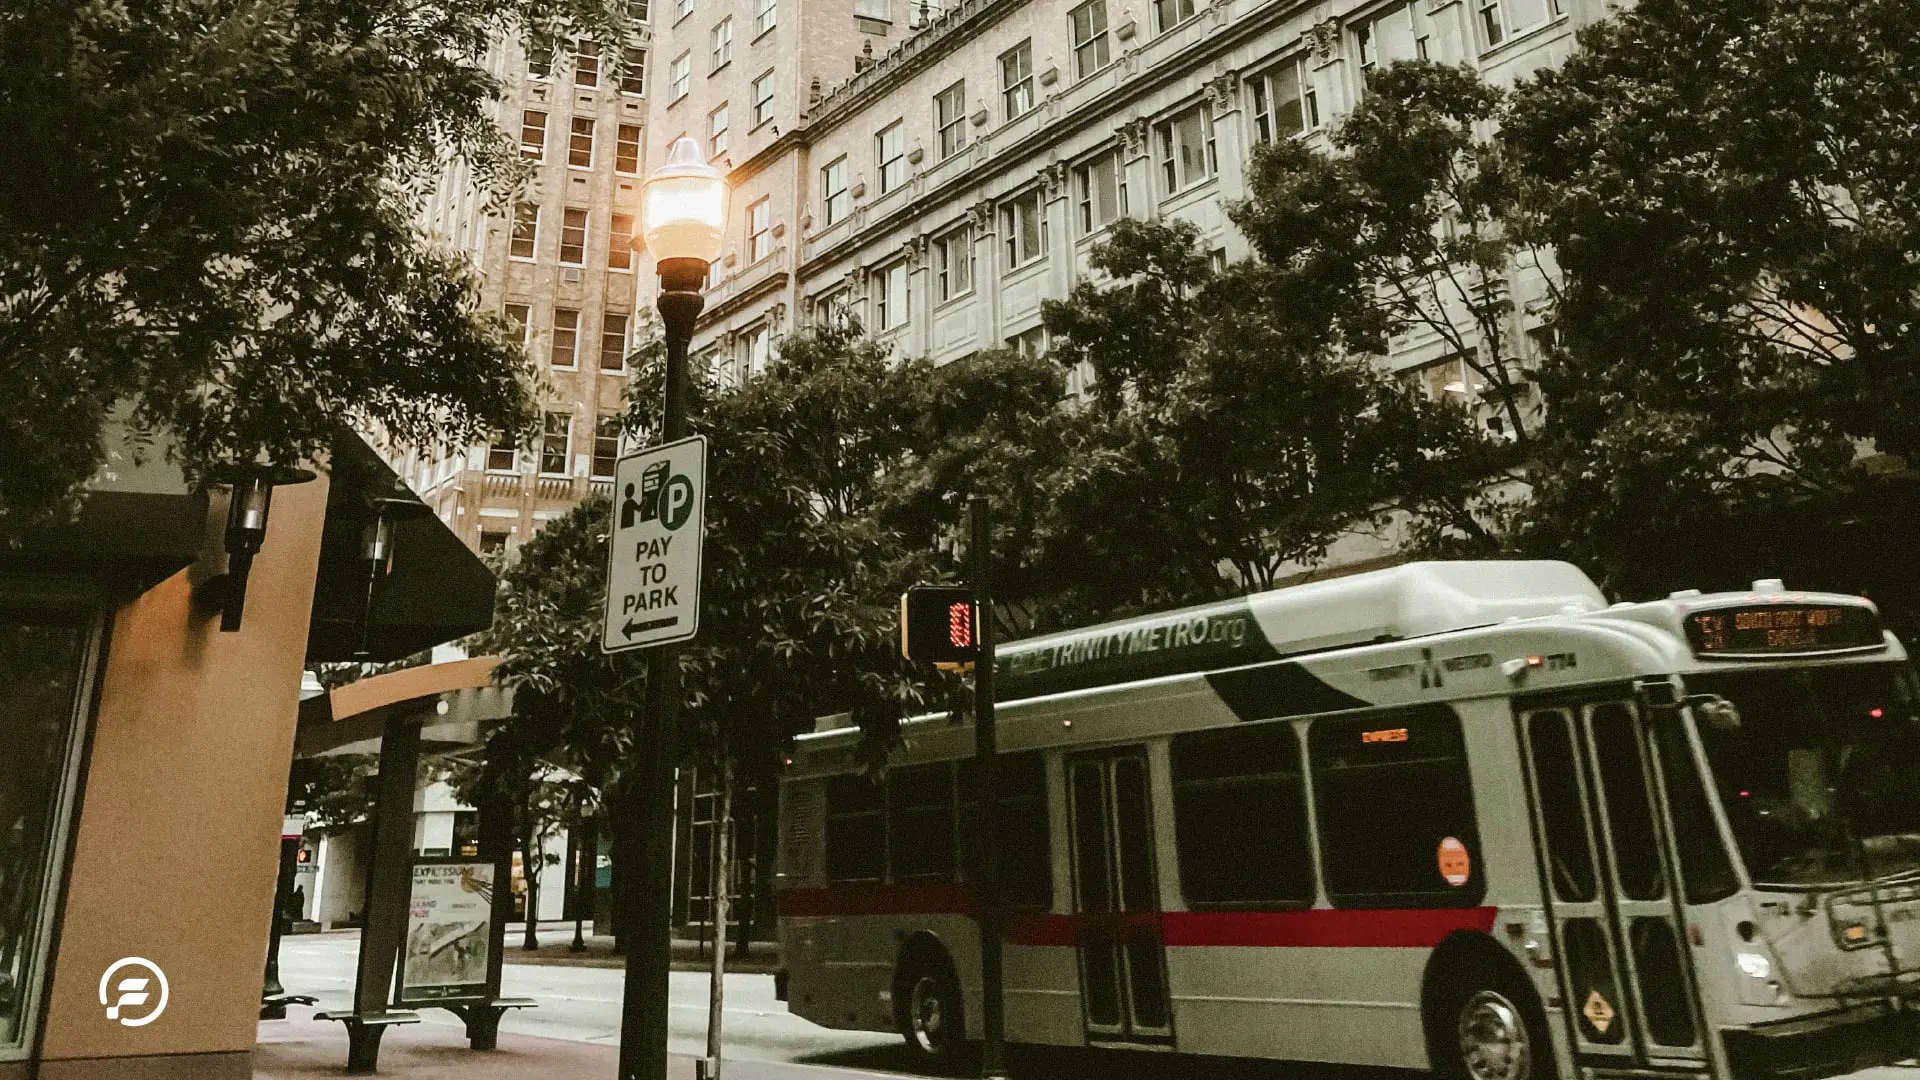 A city bus traveling through Austin Texas' city center.